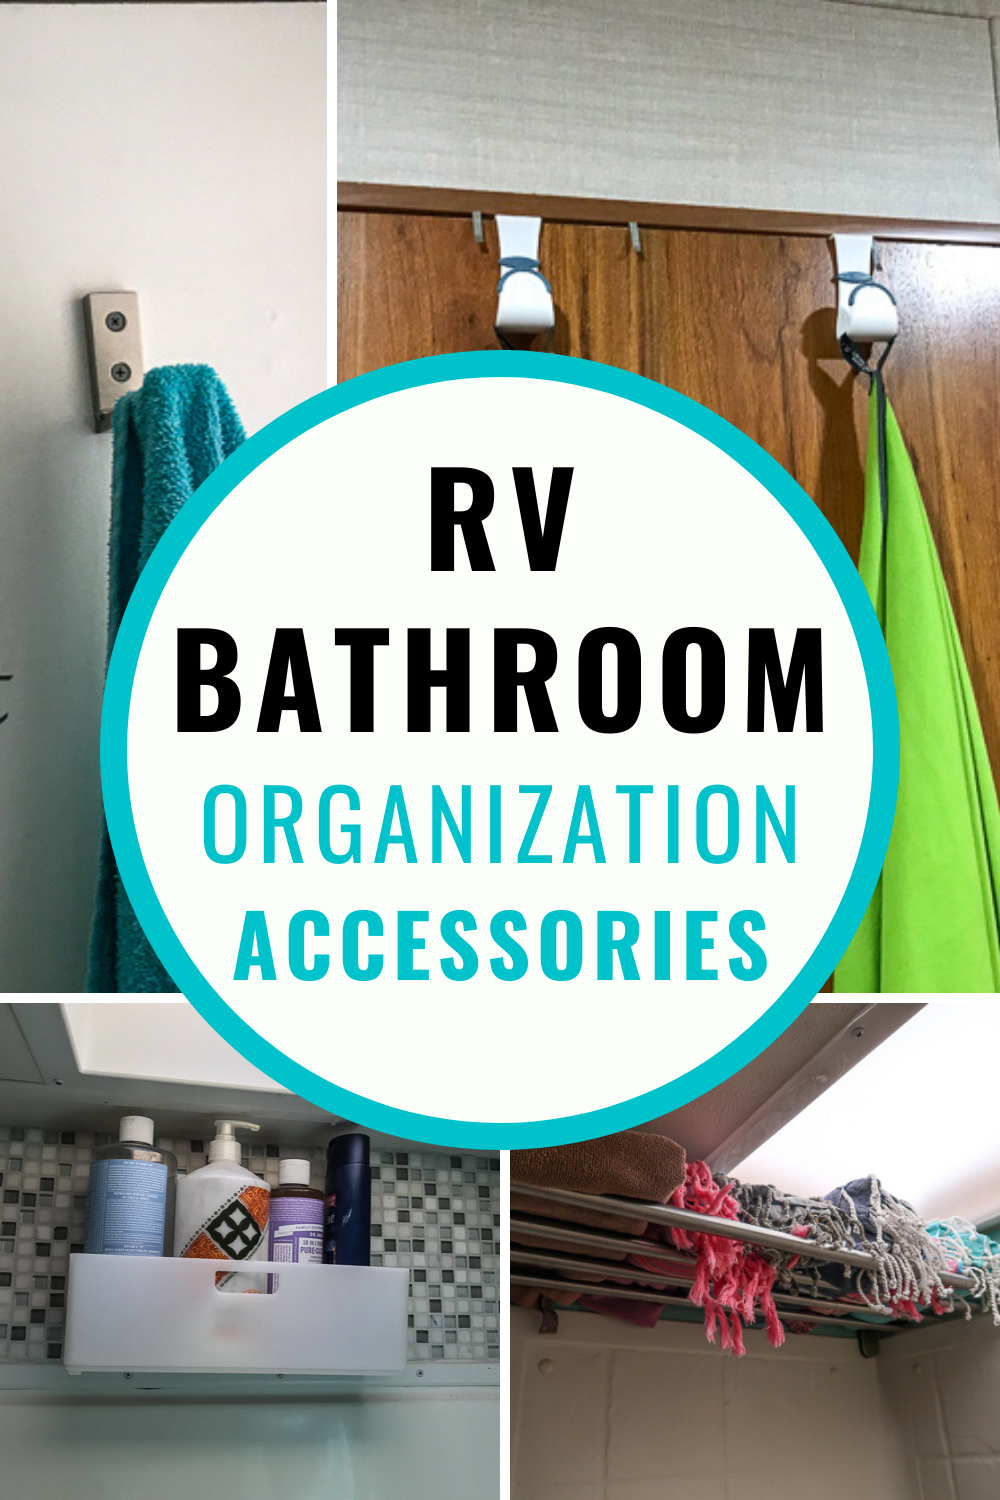 9 RV Shower Organization Ideas + Picture Inspiration! – The Crazy